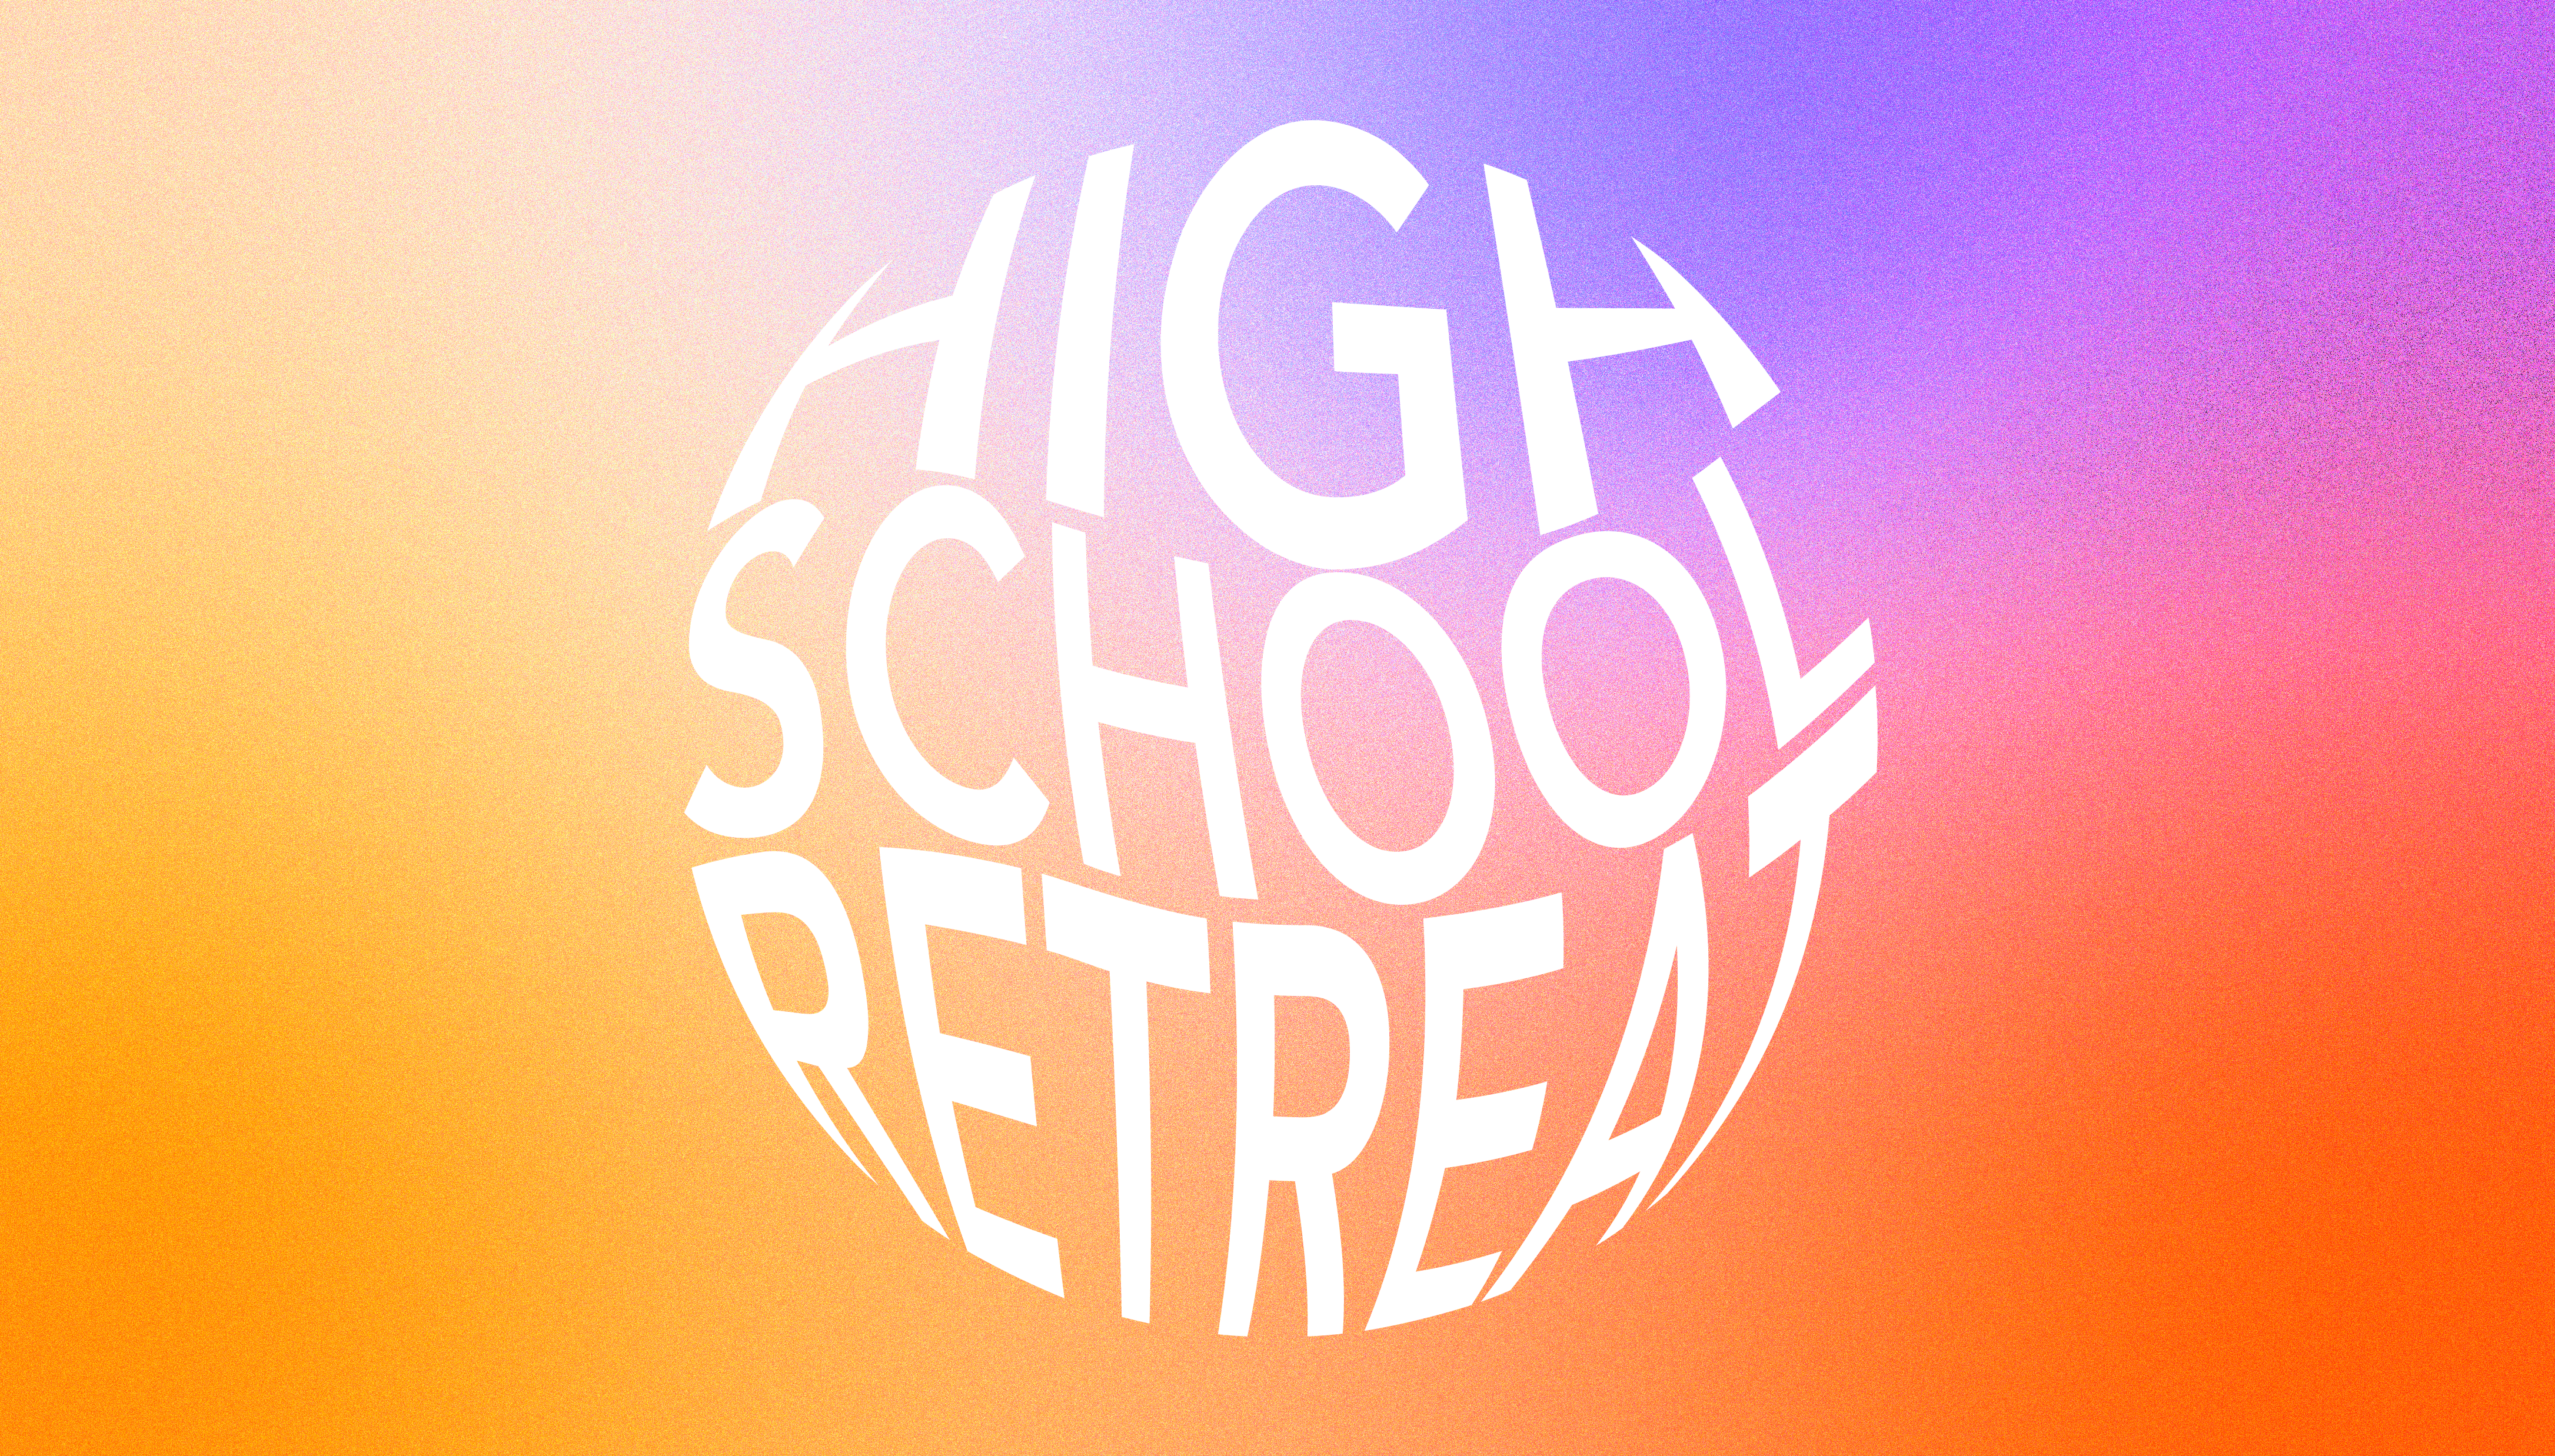 High School Retreat 22 